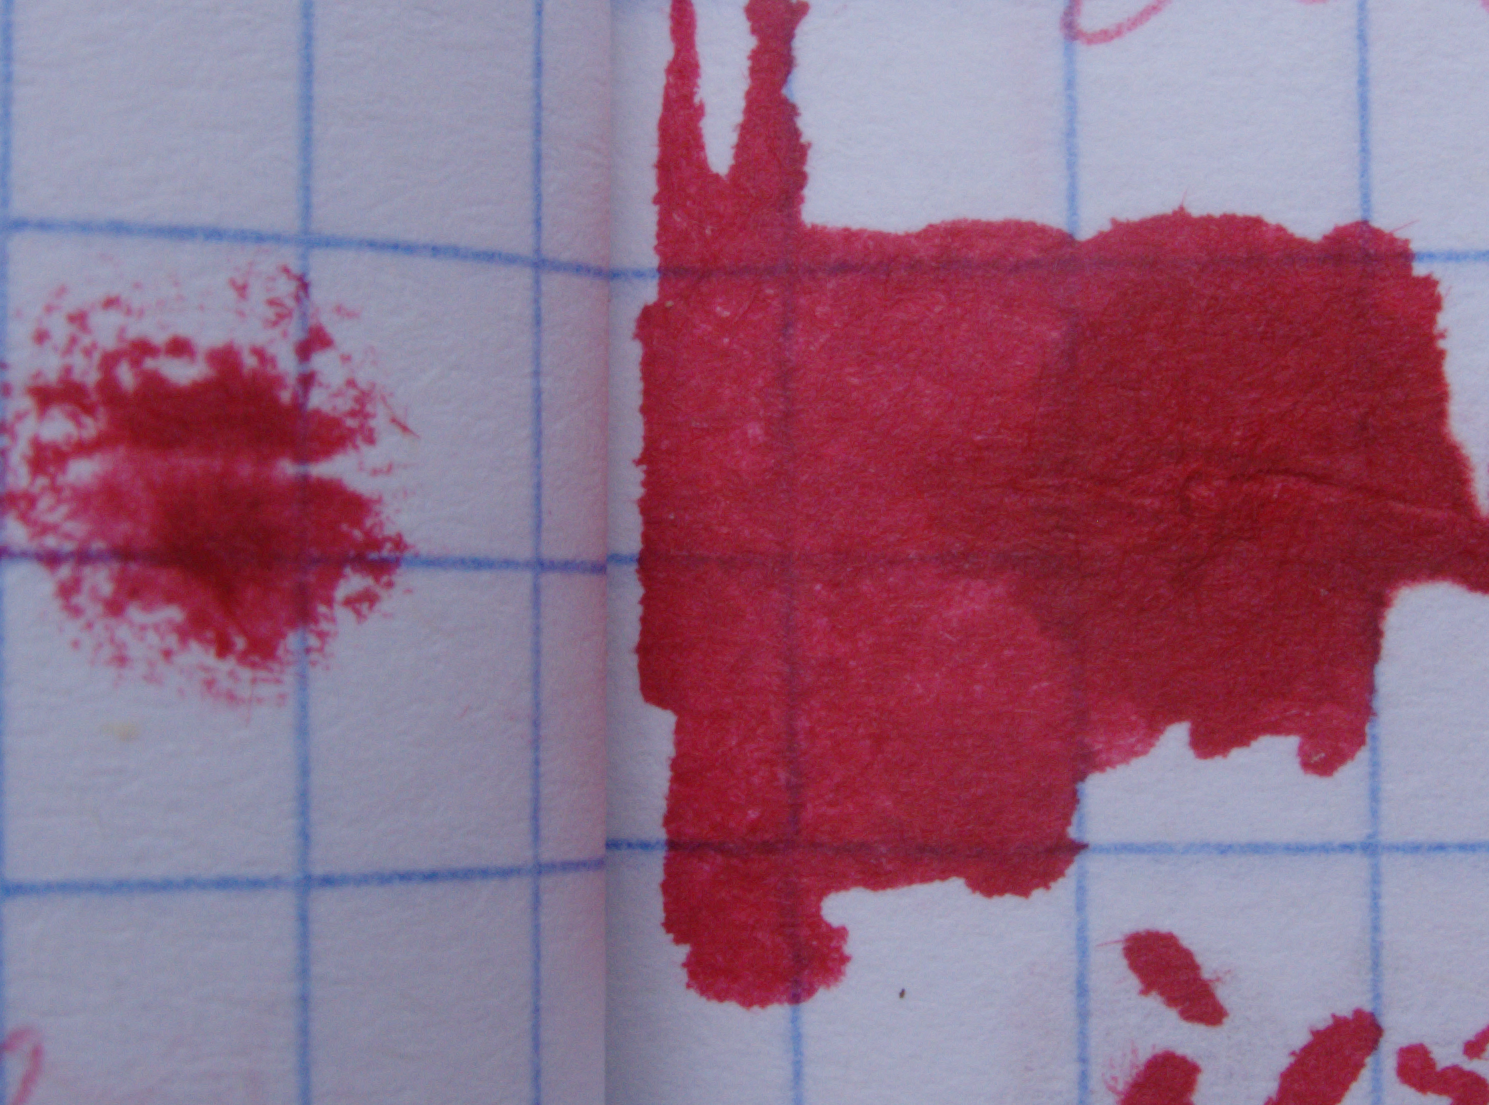 A red ink blot